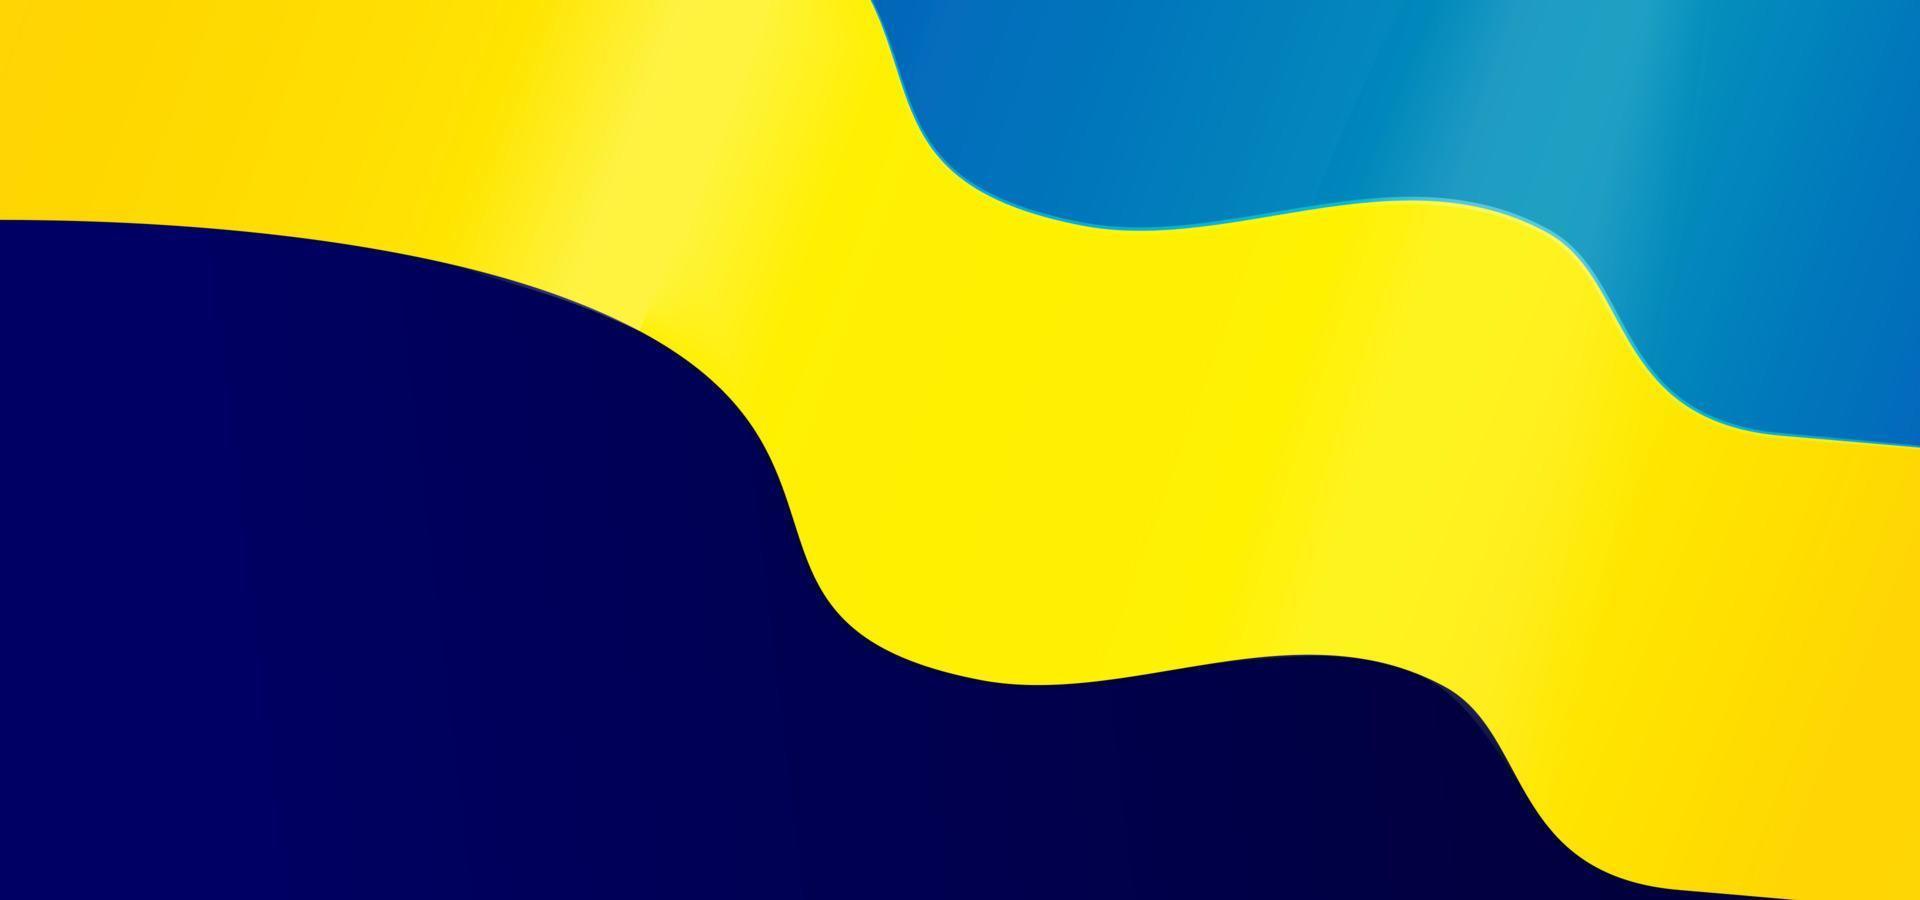 Vector background with Ukraine theme. Ukraine national flag waving vector design